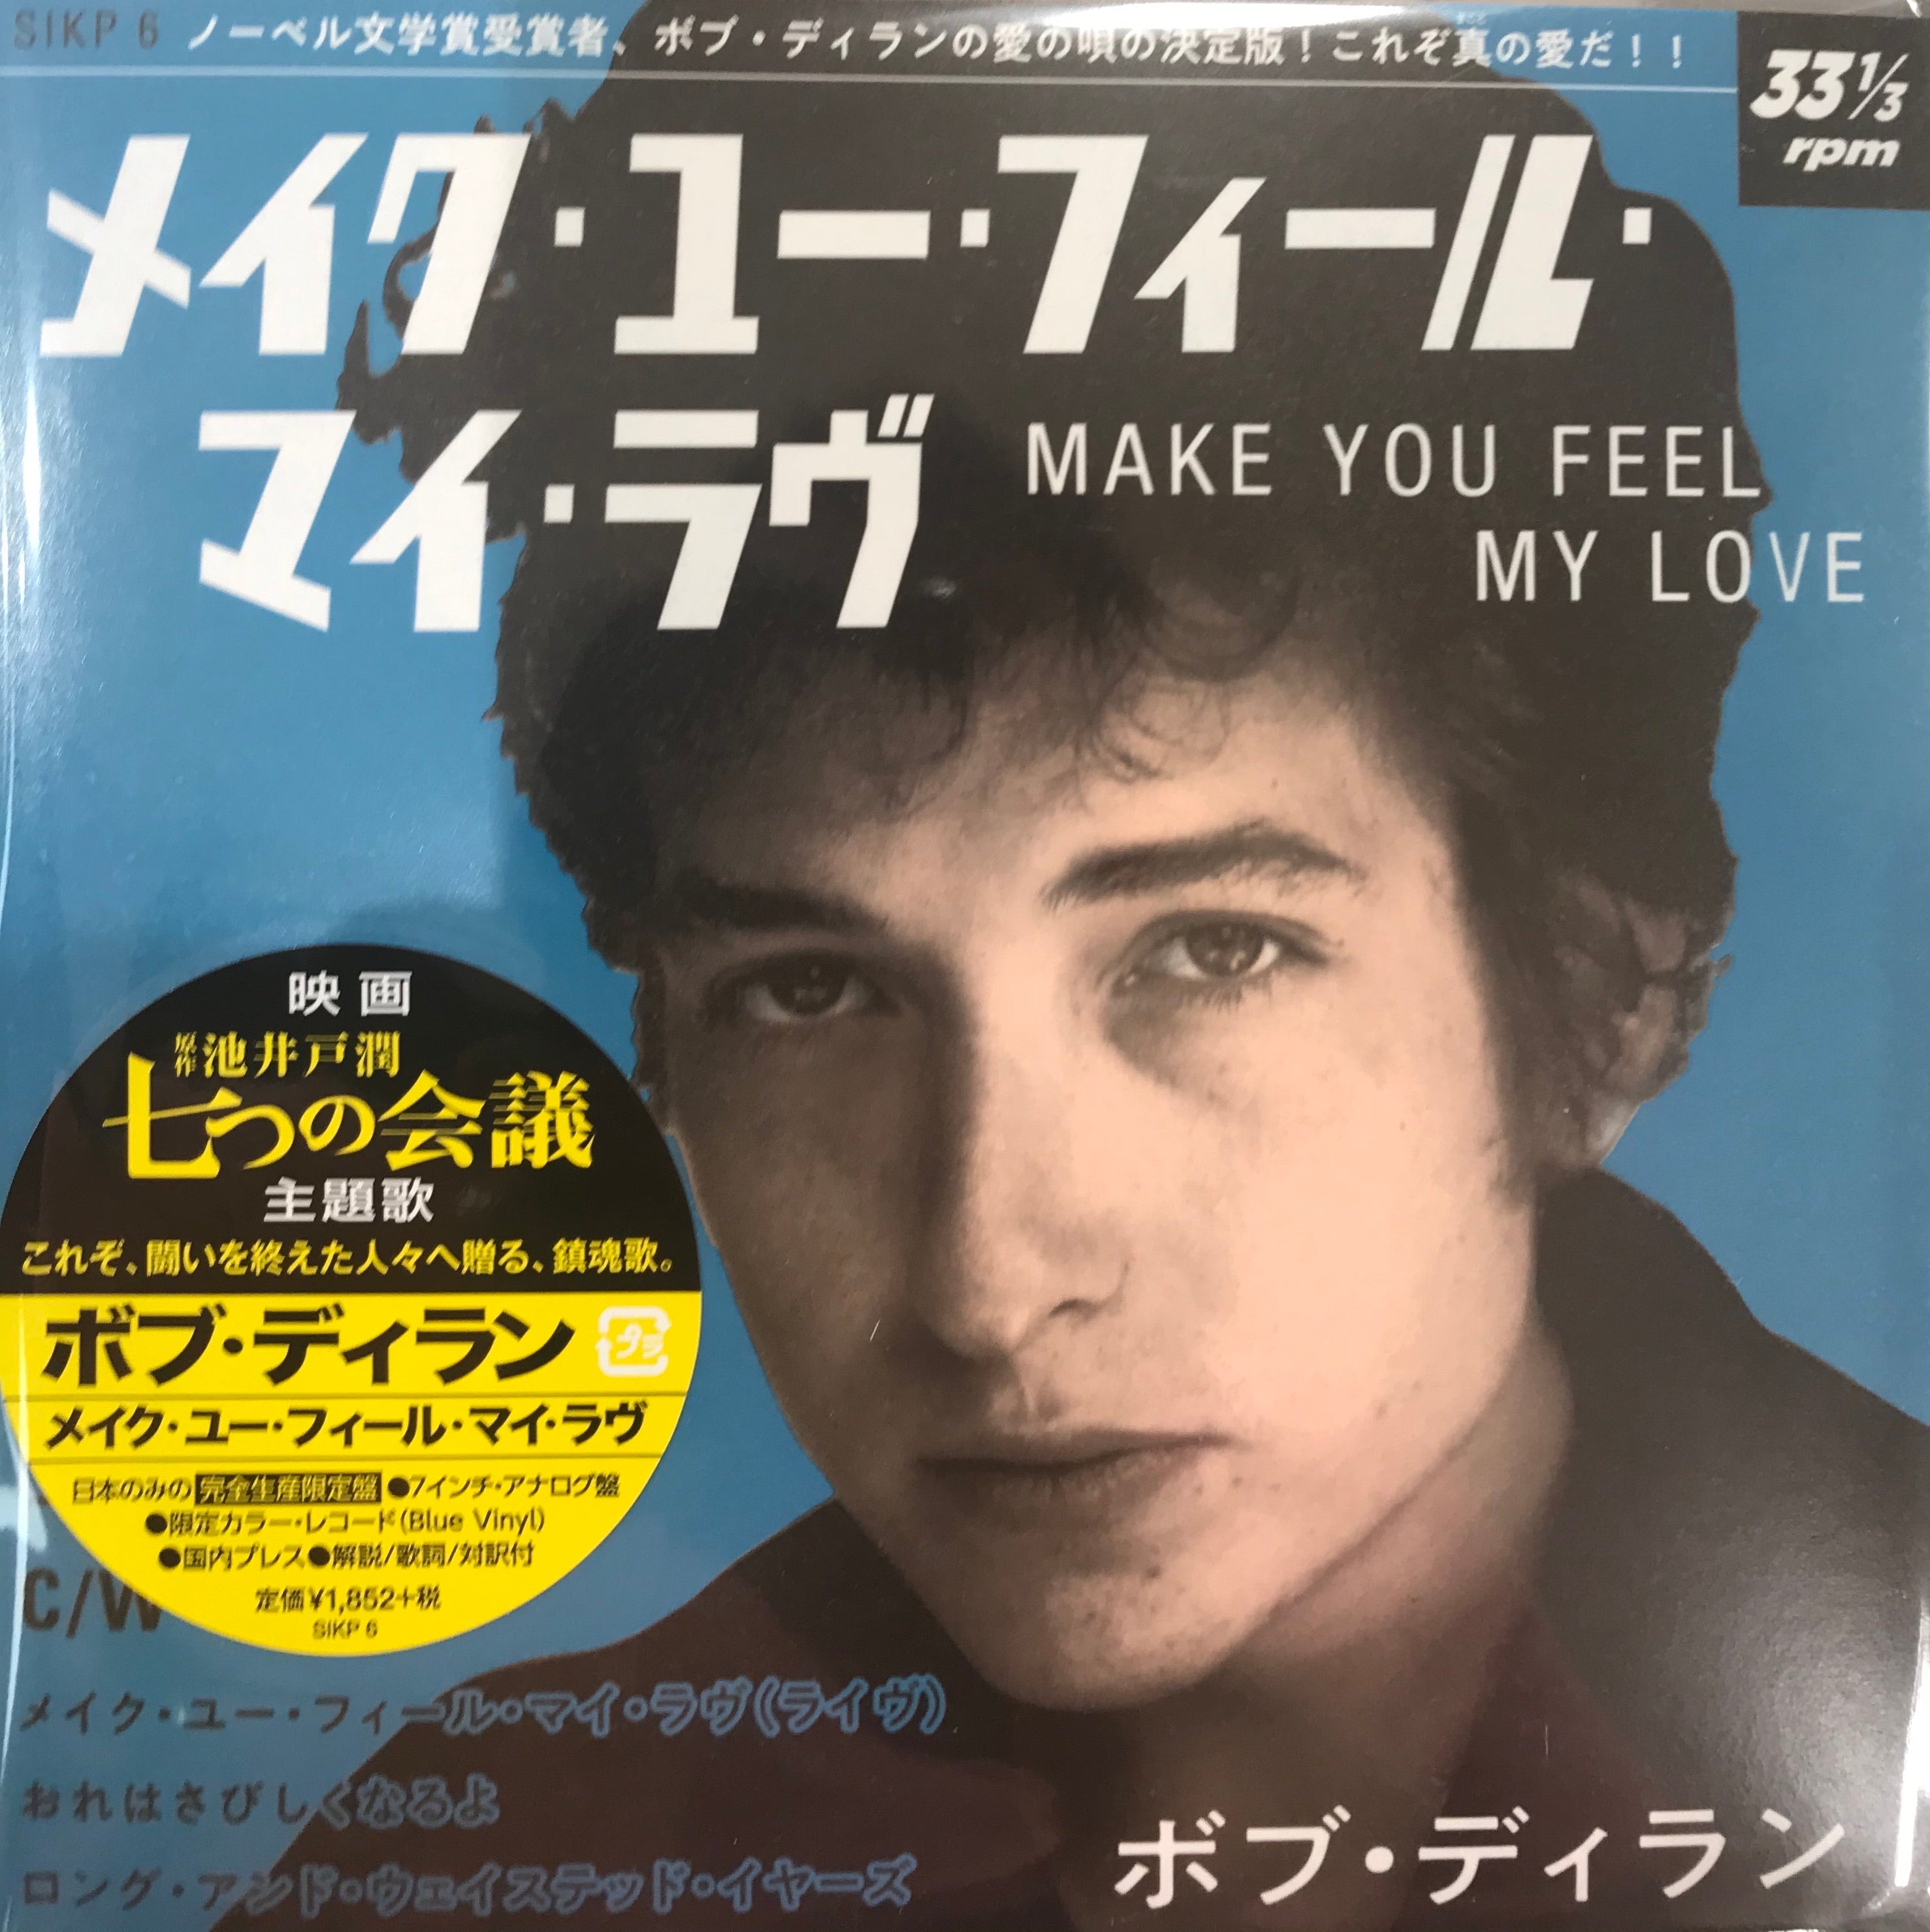 Bob Dylan - Make You Feel My Love